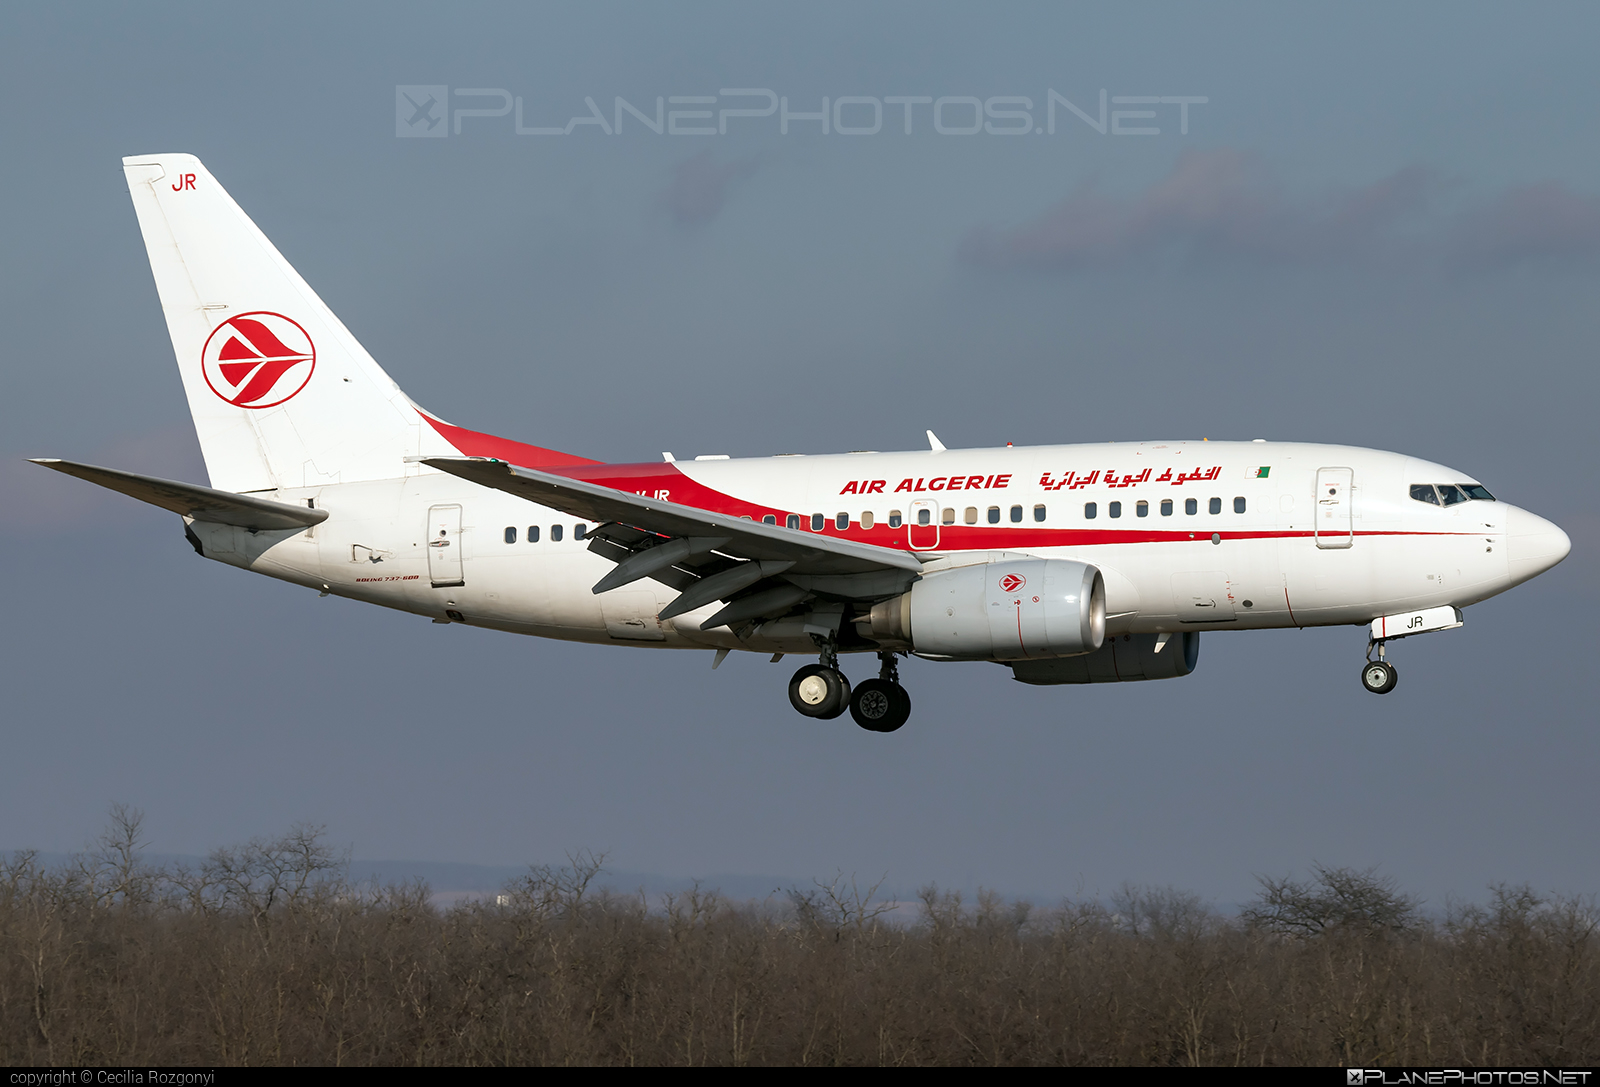 Boeing 737-600 - 7T-VJR operated by Air Algerie #airAlgerie #b737 #b737nextgen #b737ng #boeing #boeing737